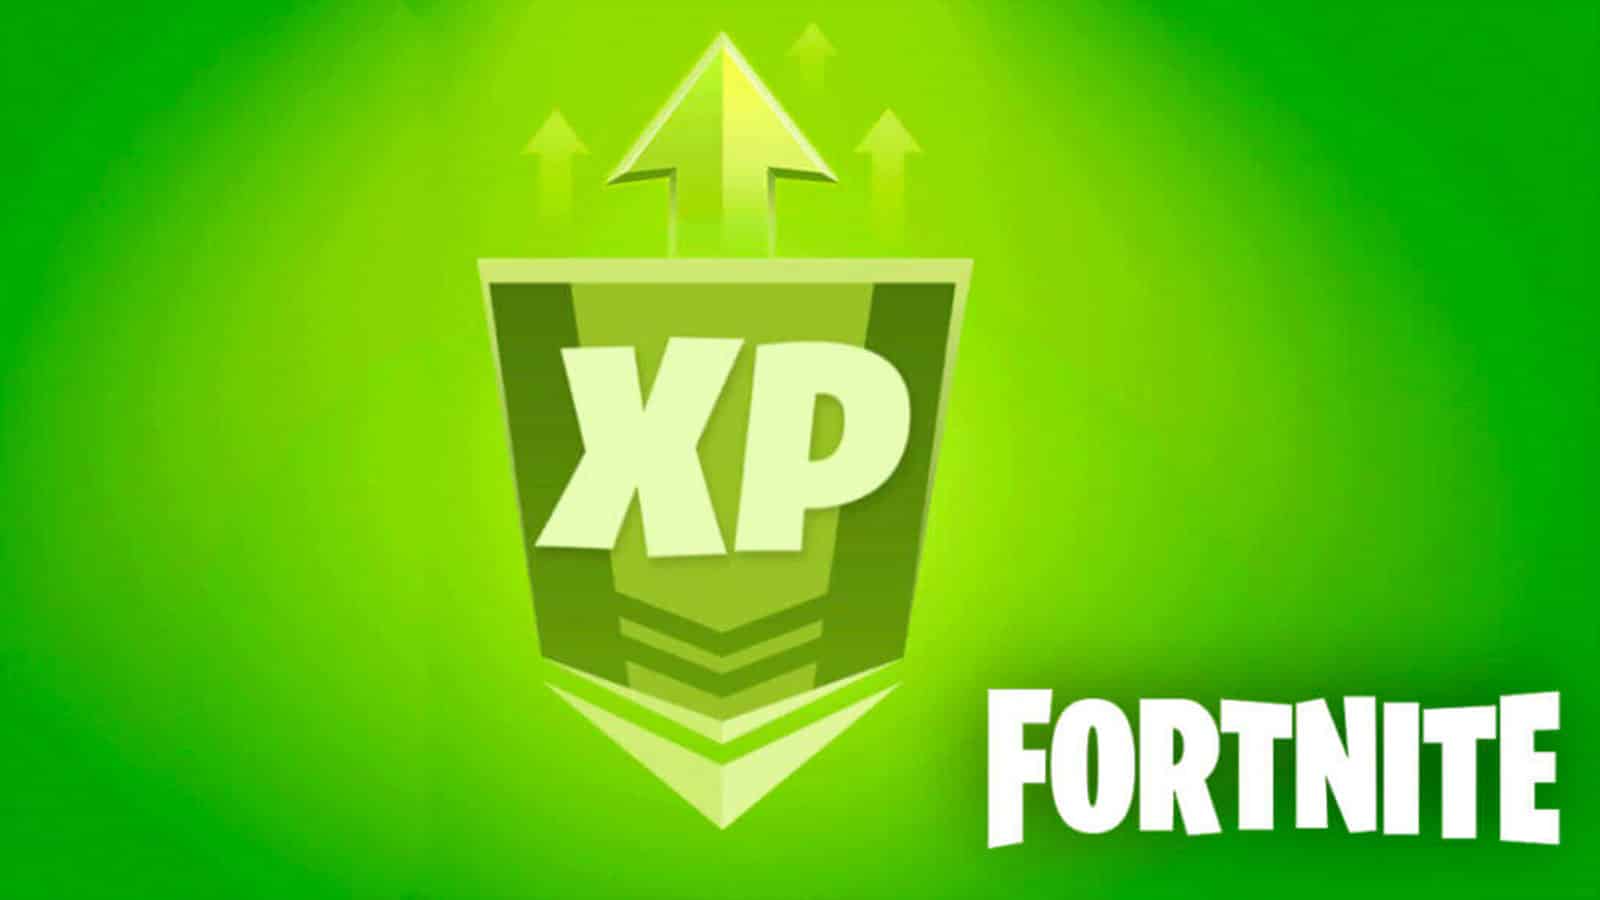 XP Fortnite